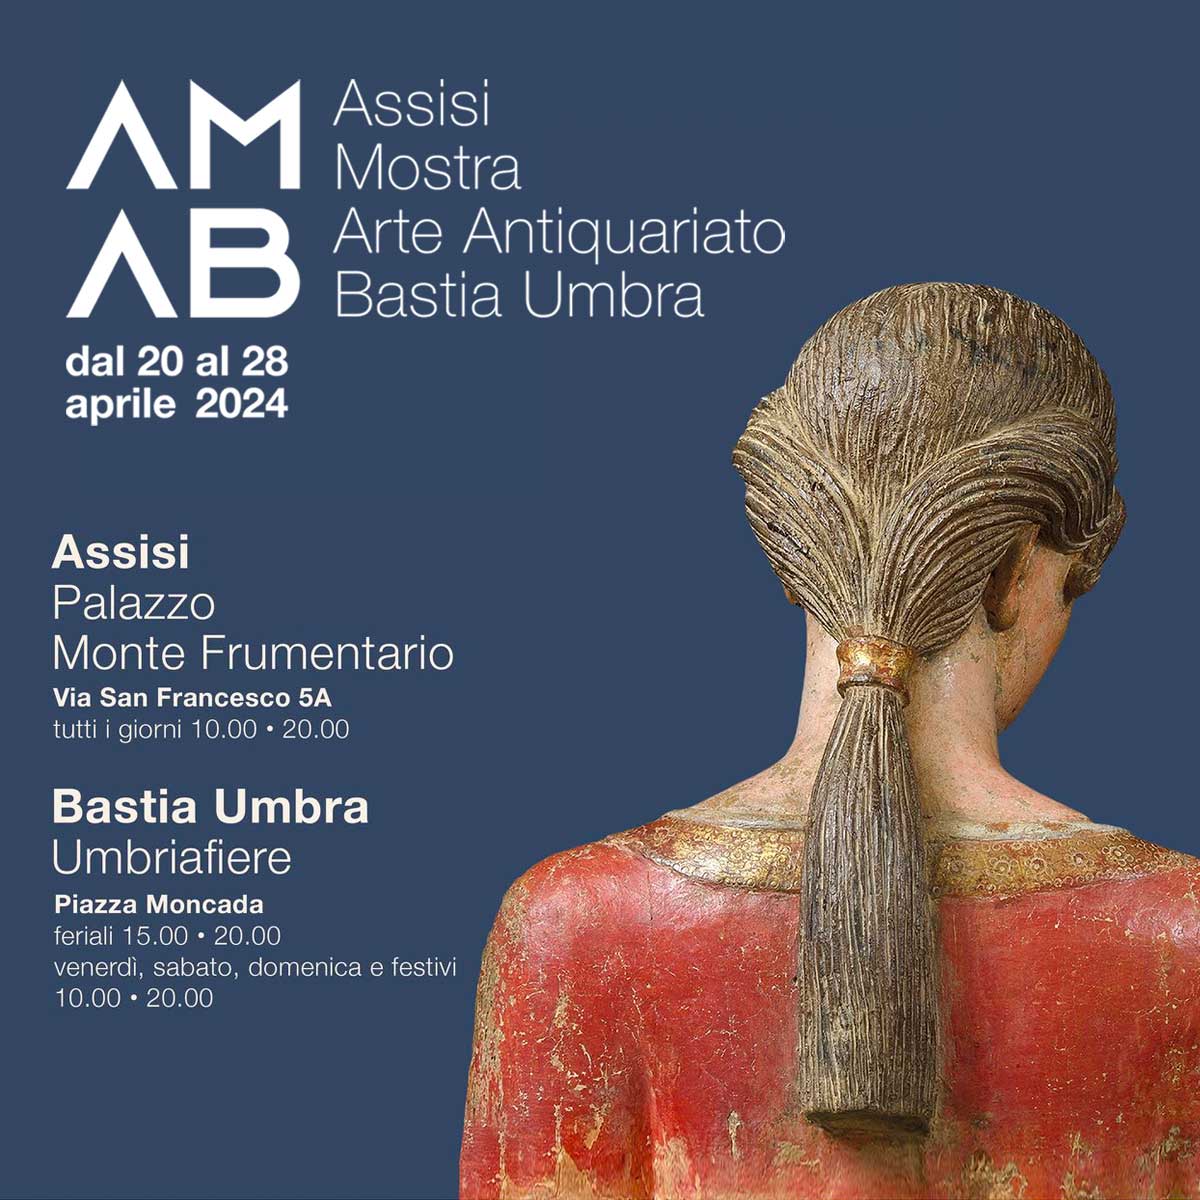 AMAB Assisi Art Antique Exhibition Bastia Umbra at Umbriafiere (Pg)